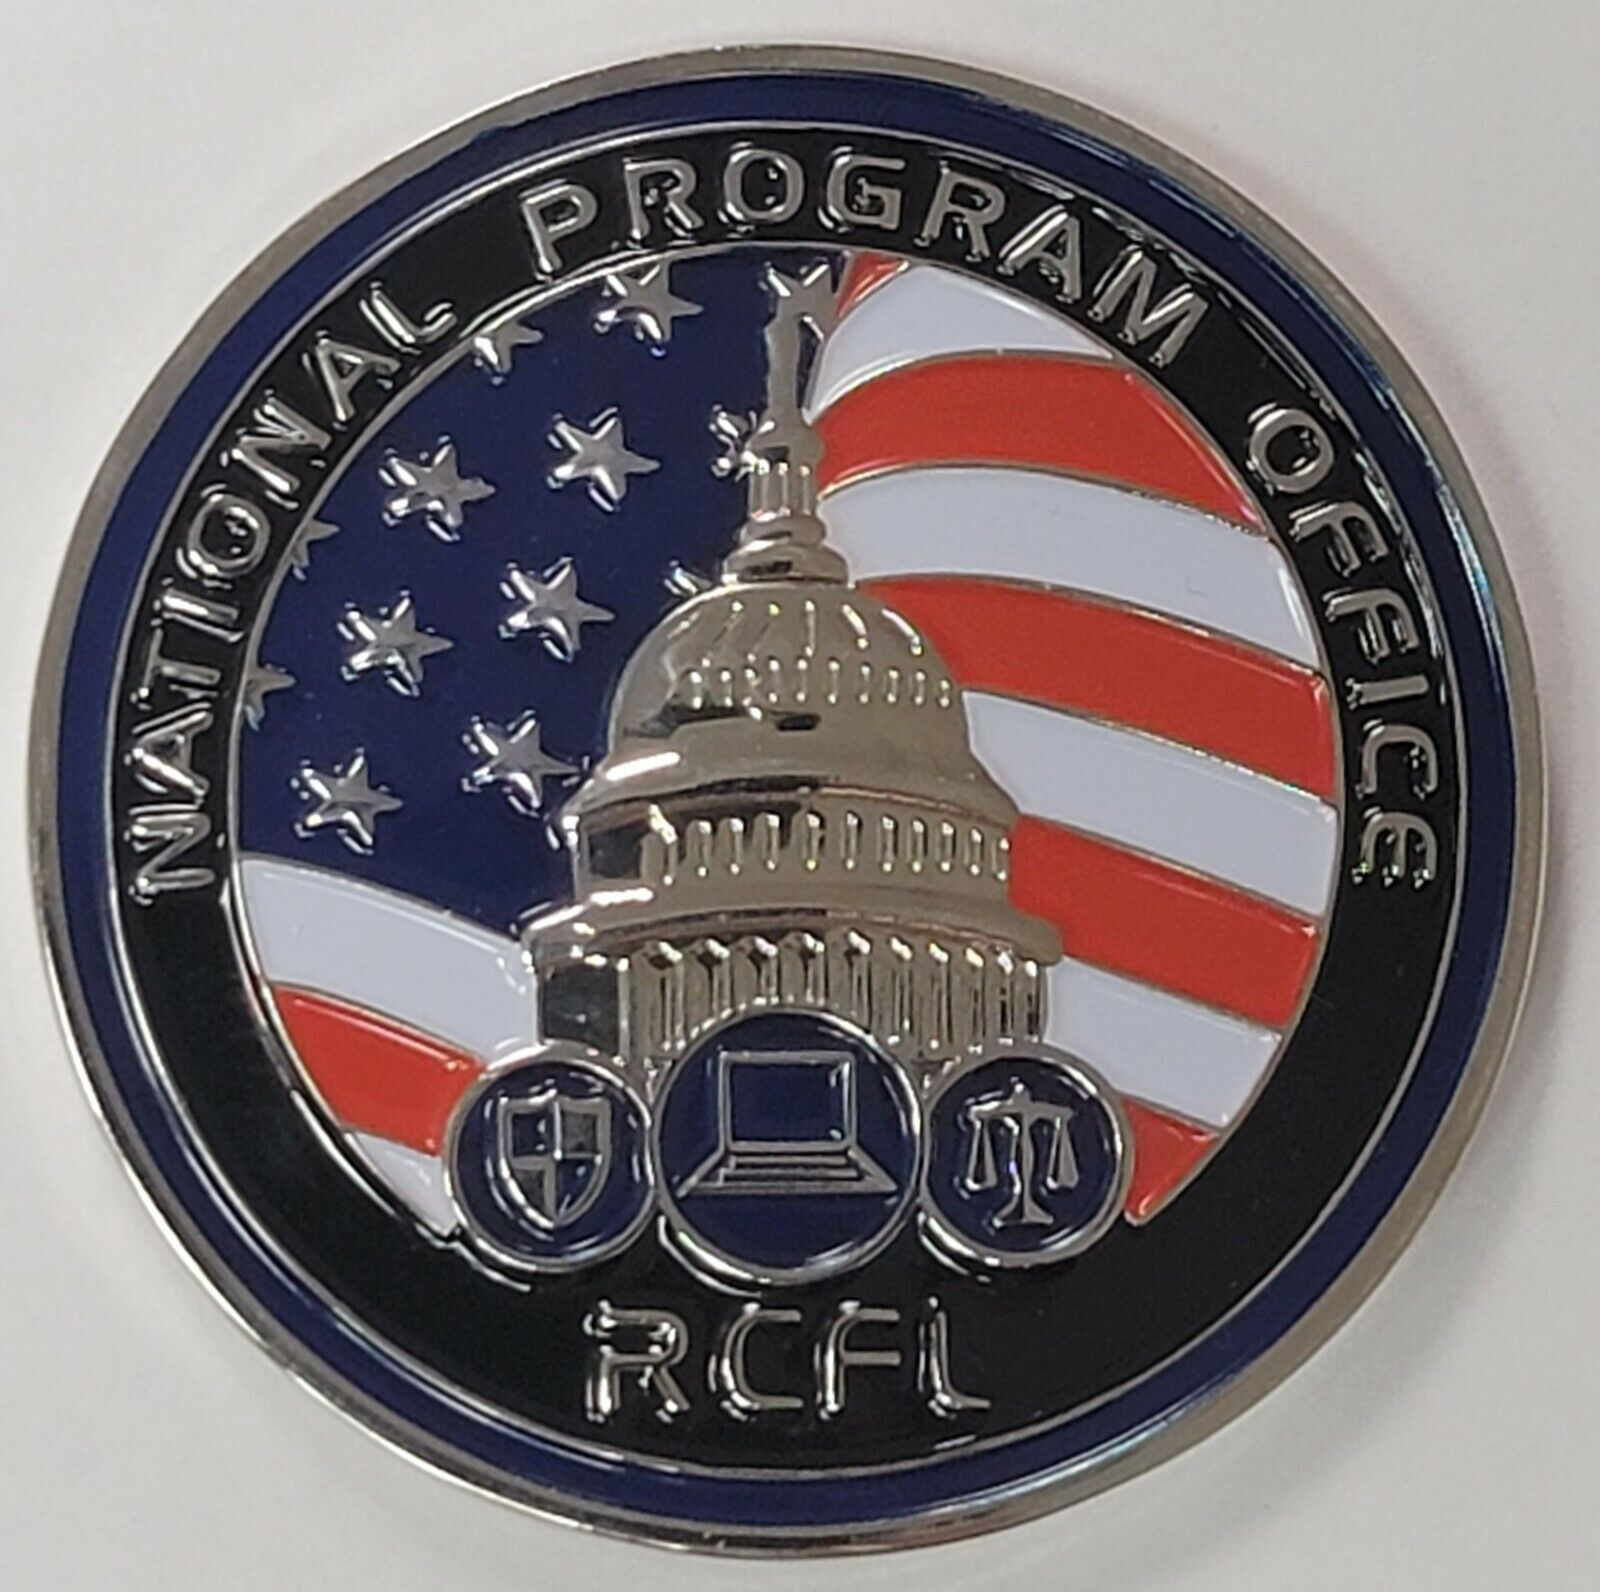 FBI NATIONAL PROGRAM OFFICE RCFL REGIONAL COMPUTER FORENSICS LABORATORY COIN